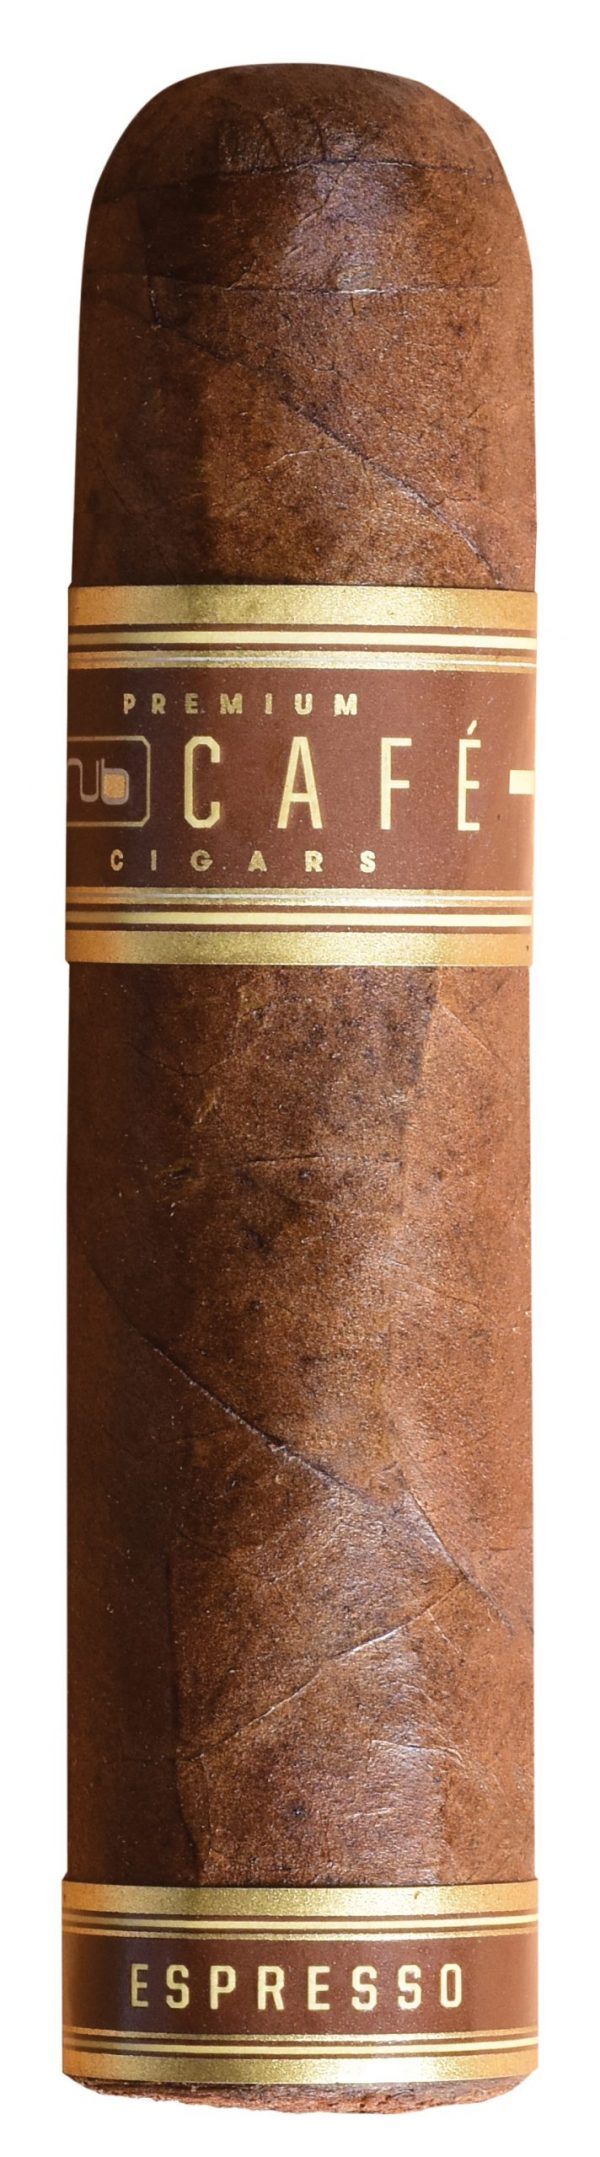 nub cafe espresso single cigar